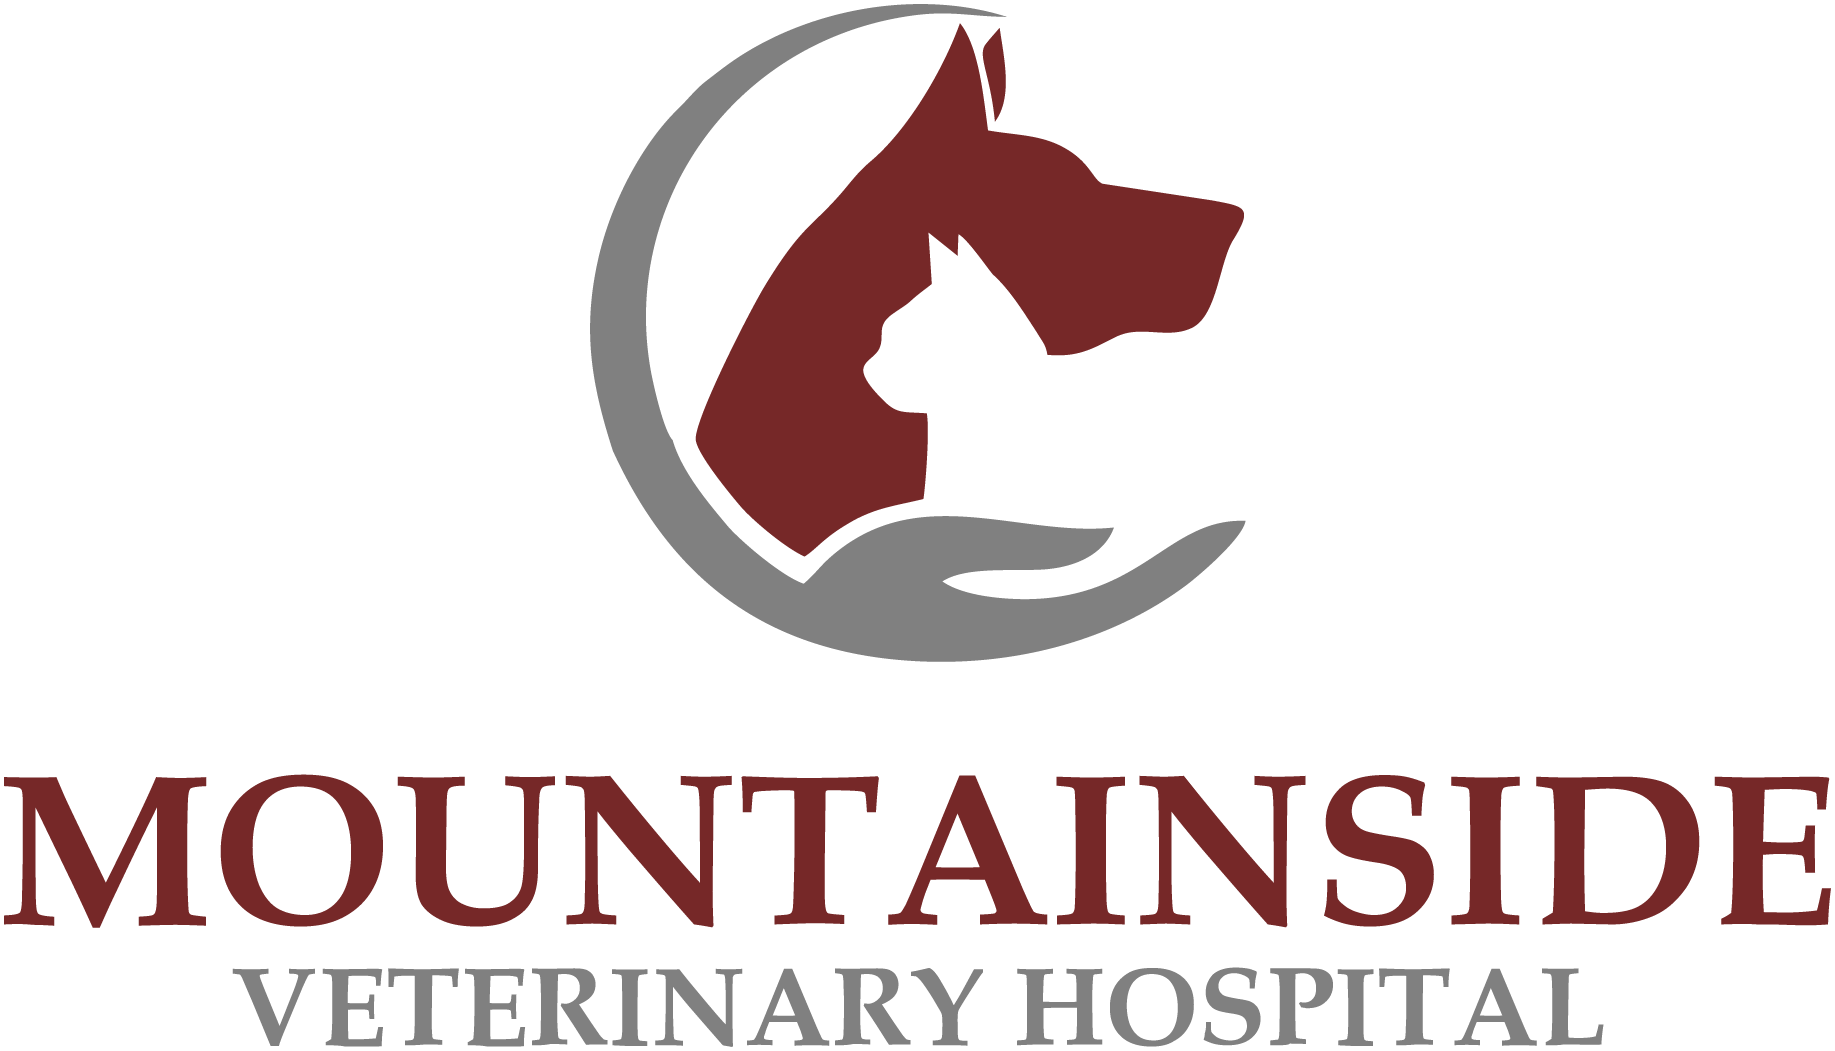 Home | Mountainside Veterinary Hospital